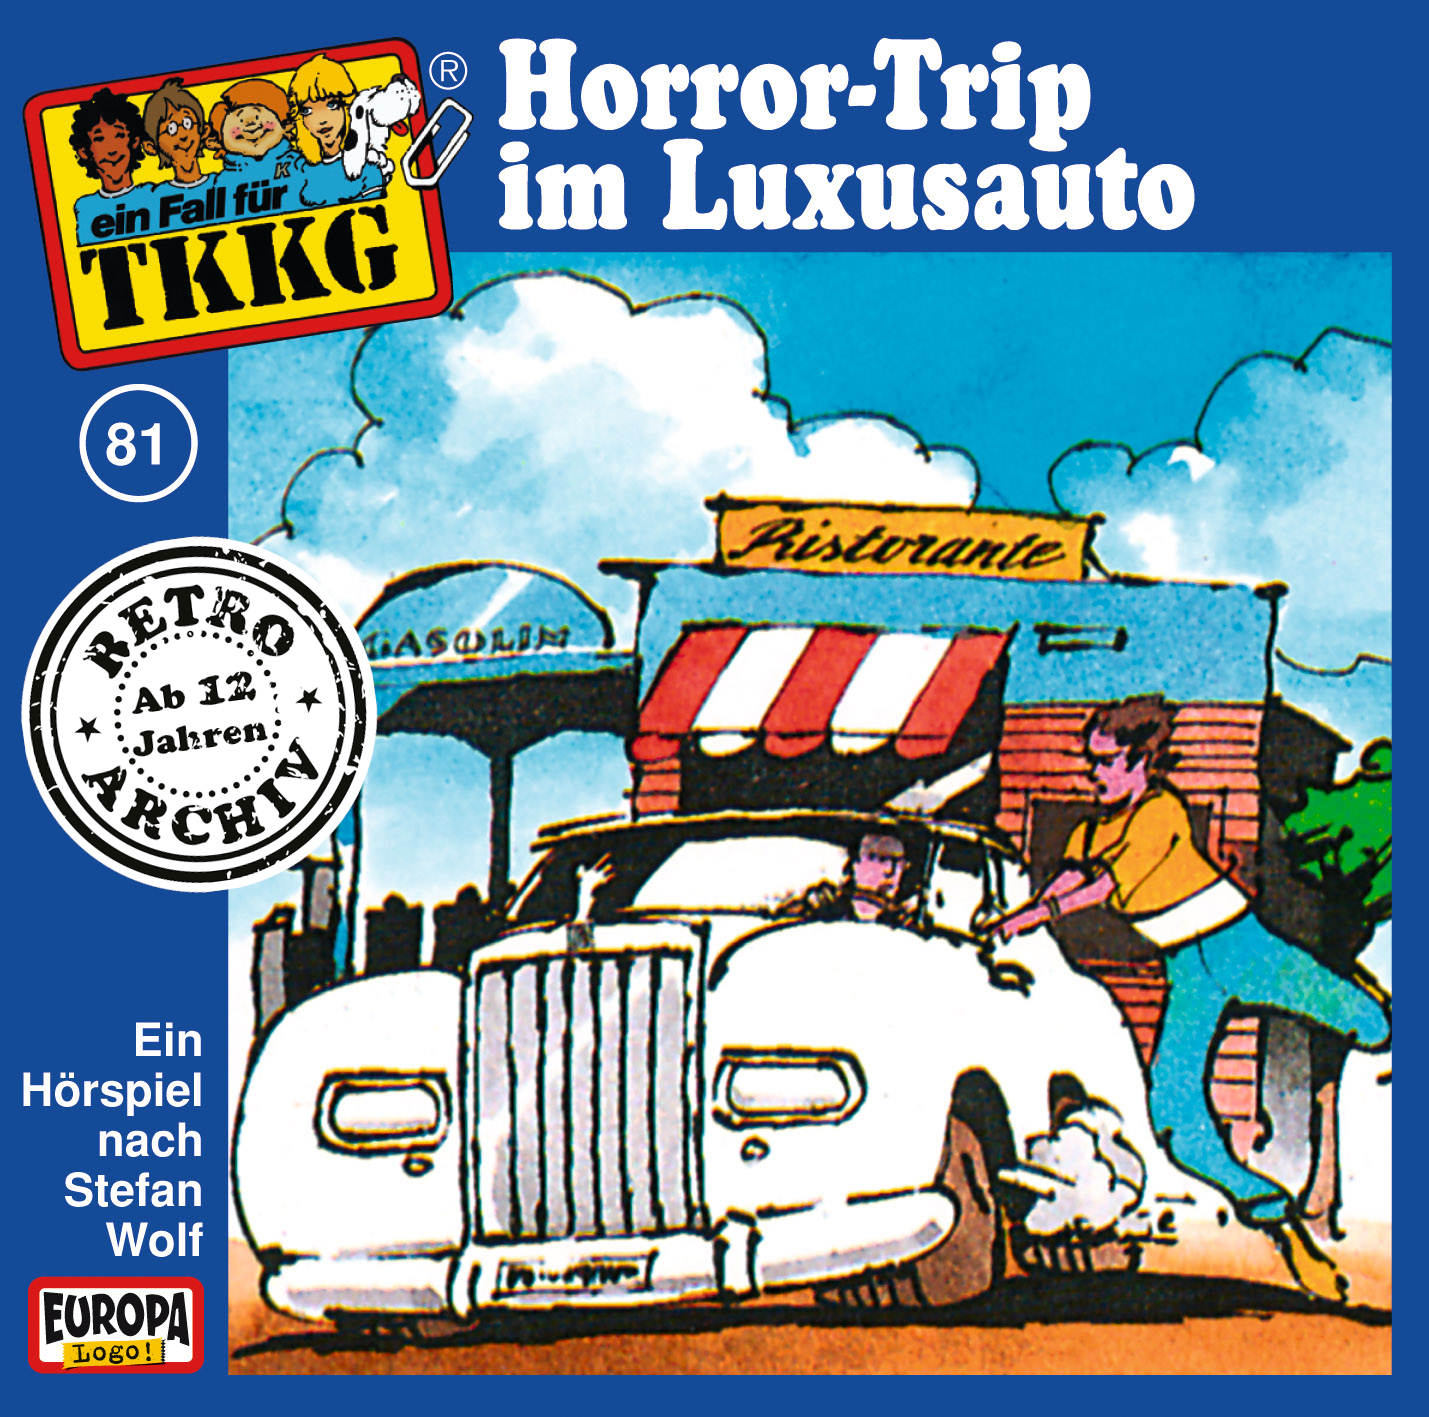 TKKG Retro-Archiv - Horror-Trip im Luxusauto